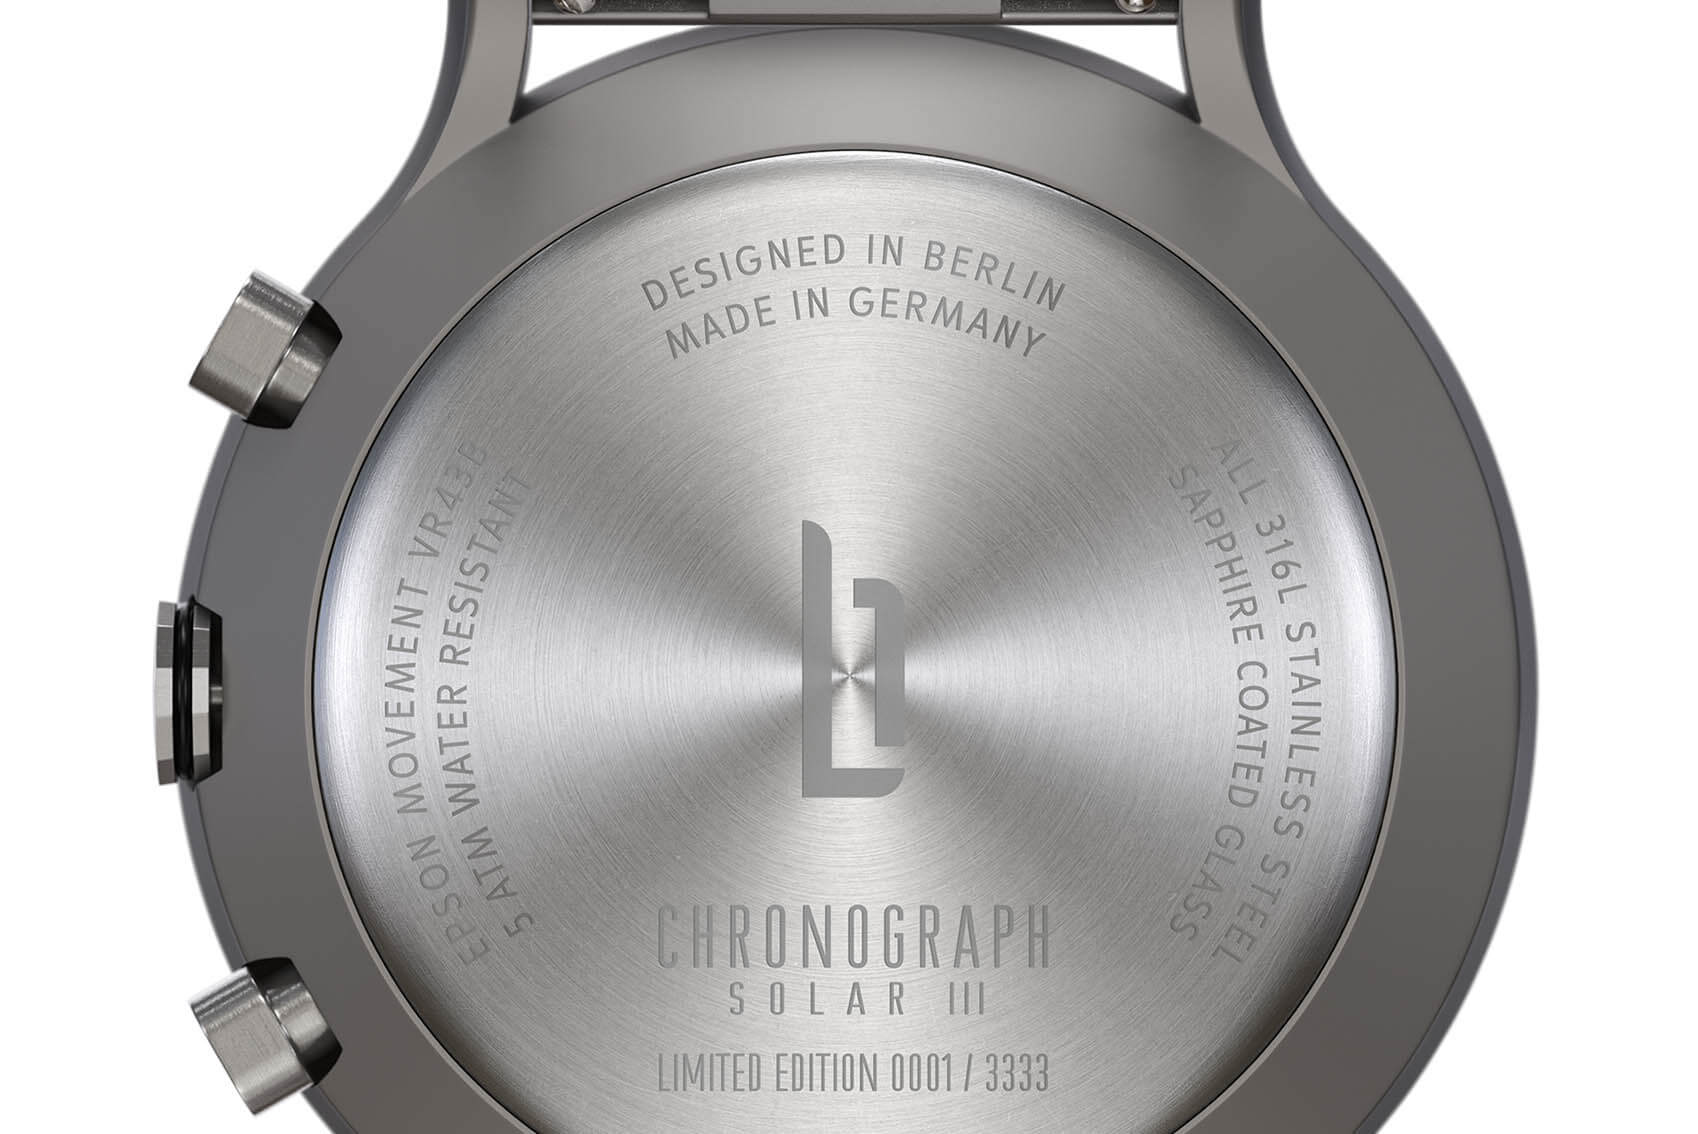 Chronograph Limited Edition Solar III